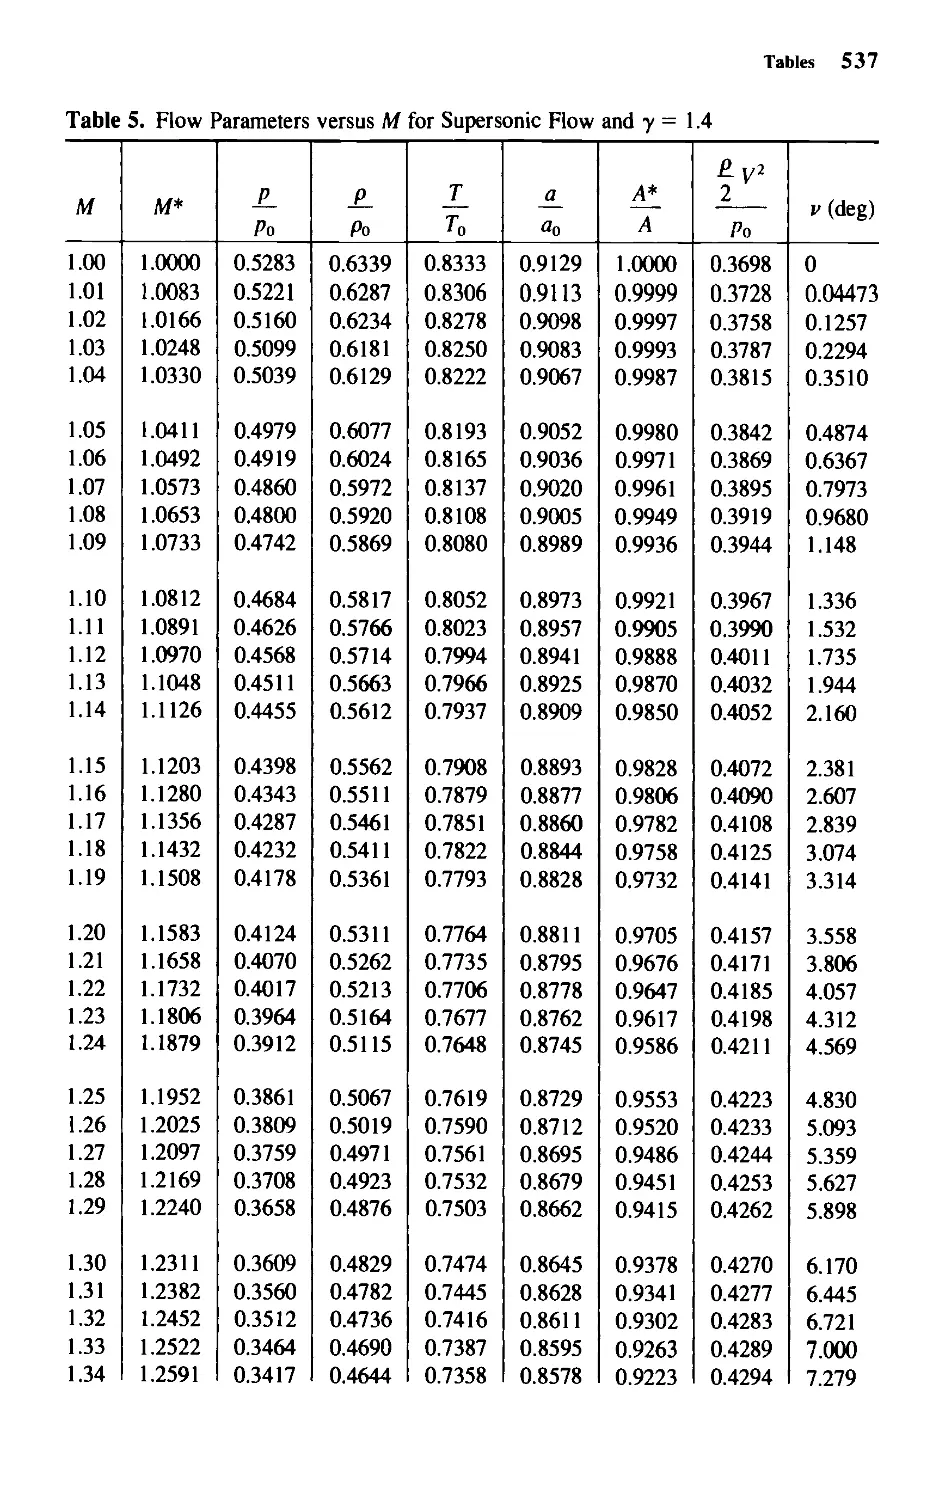 Table 5 - Flow Parameters versus M for Supersonic Flow